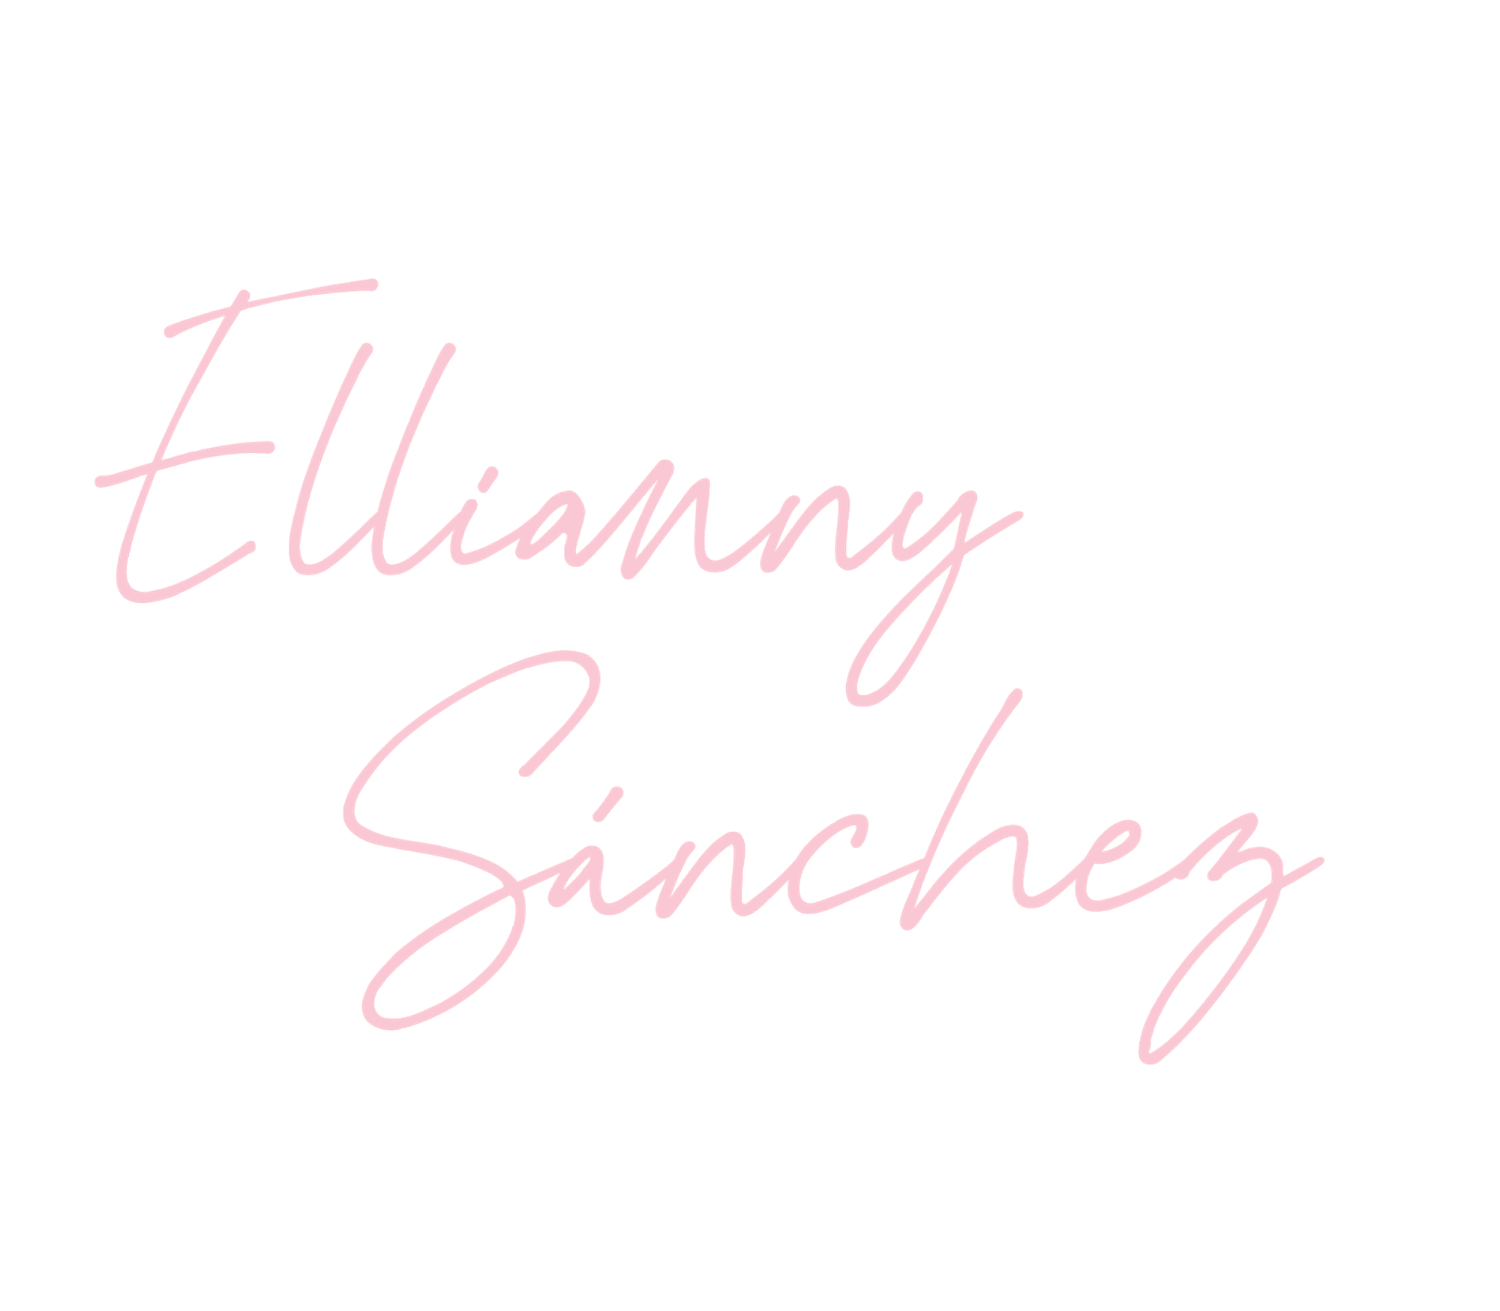 ¡Hola! Soy Ellianny Sánchez